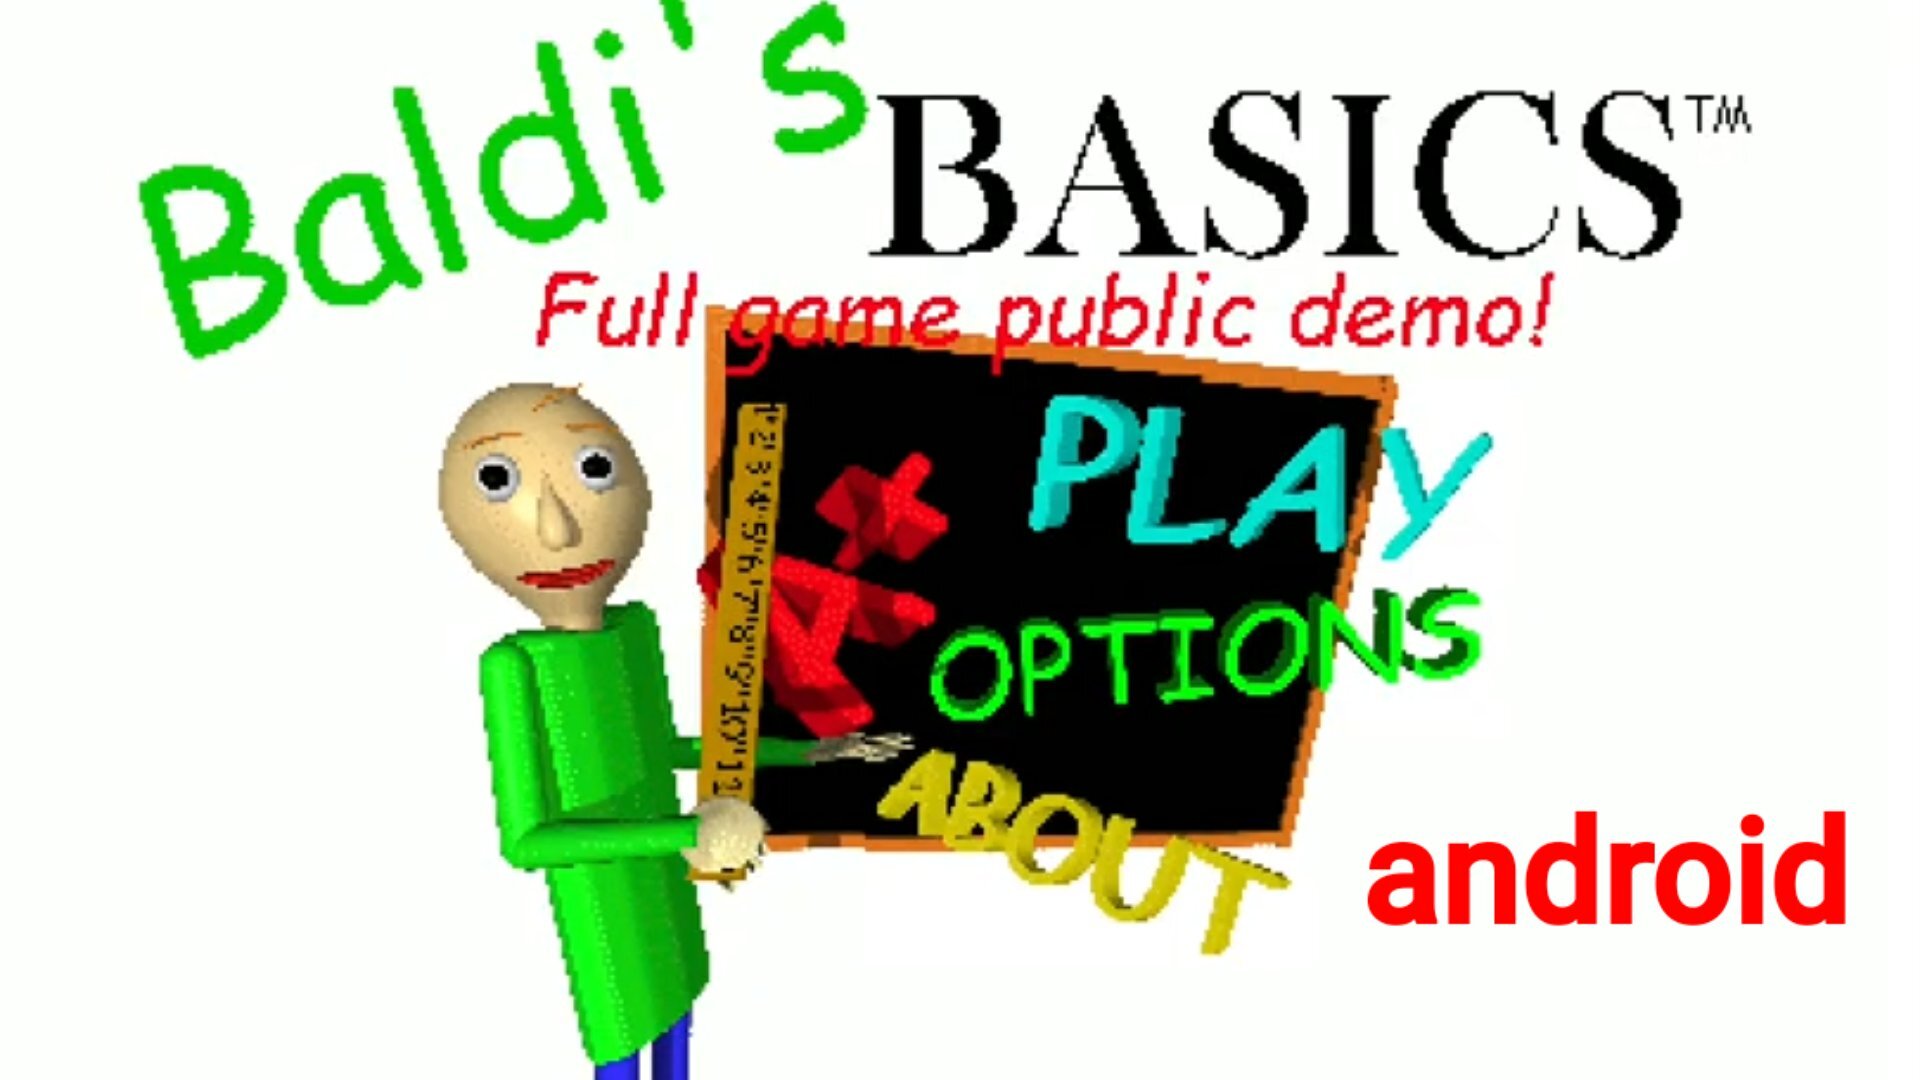 Baldi Basics Classic Remastered. Baldi Plus Android Port. Baldi basics public demo